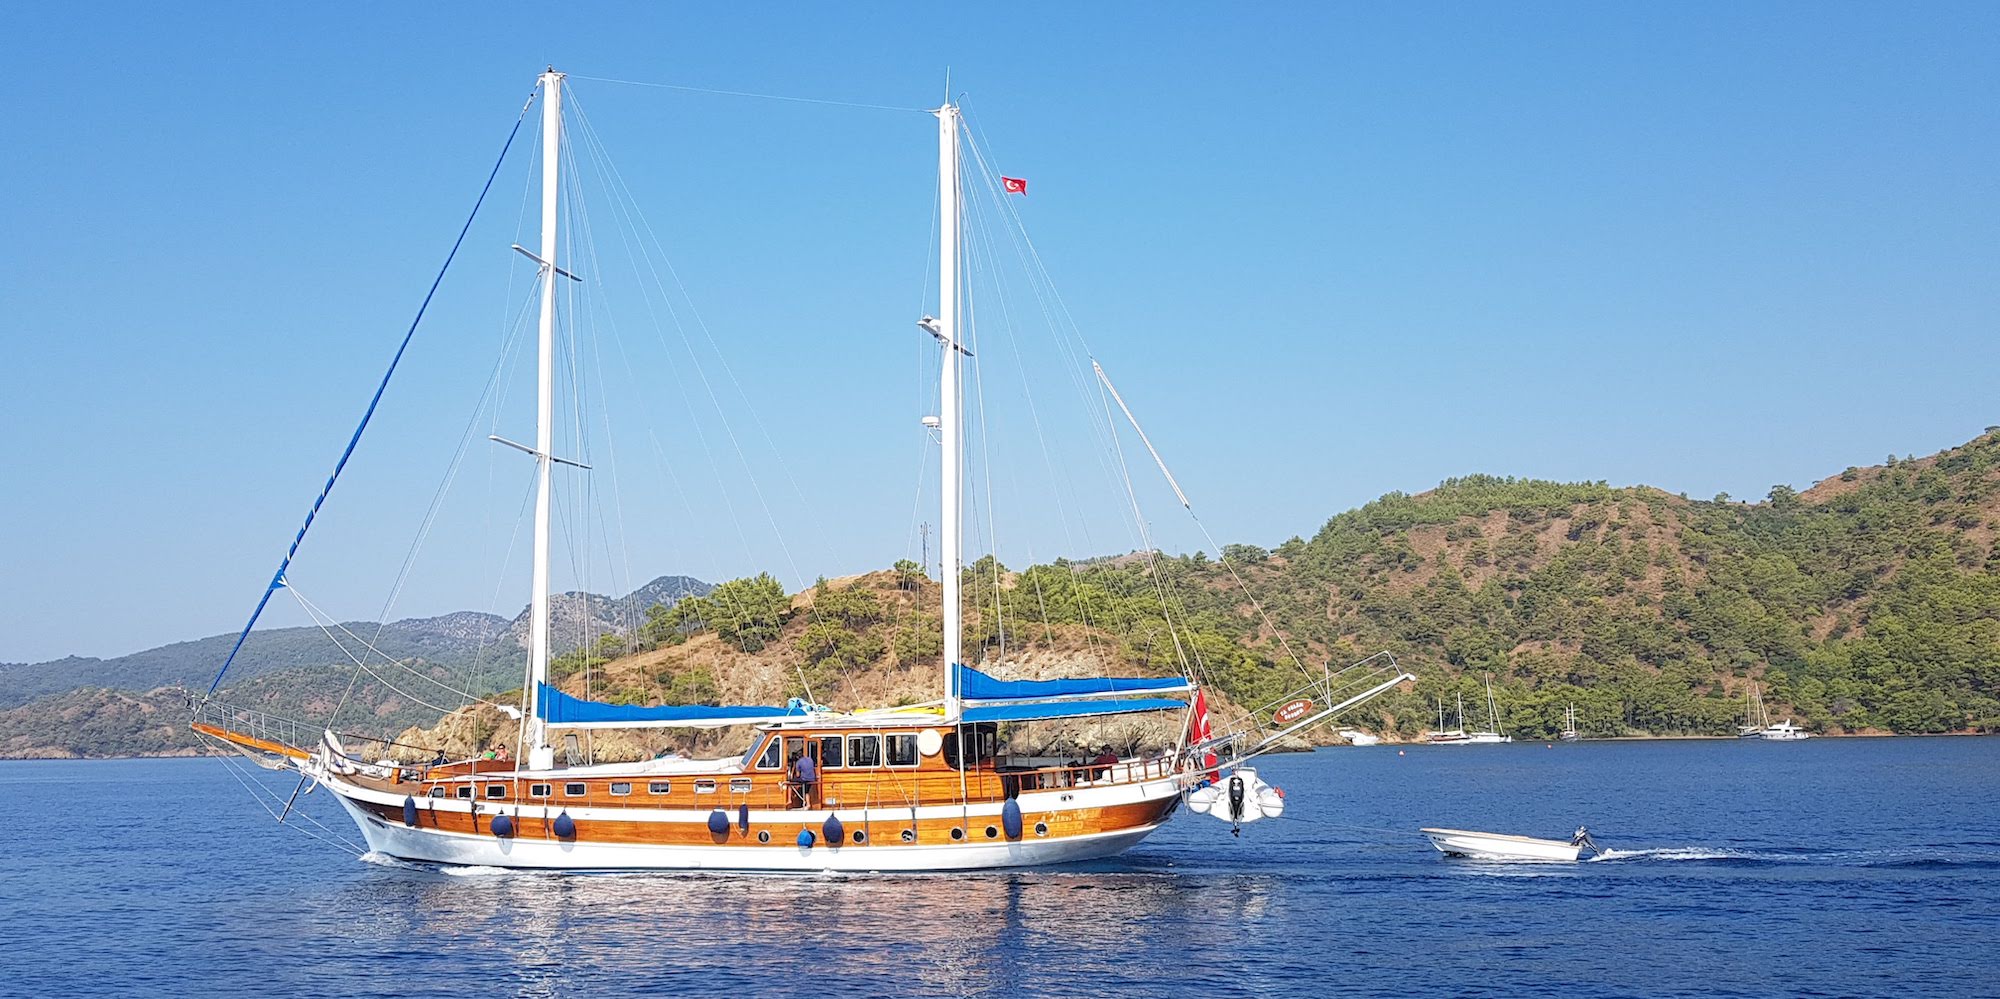 Ya Selam Gulet on the water in Turkey